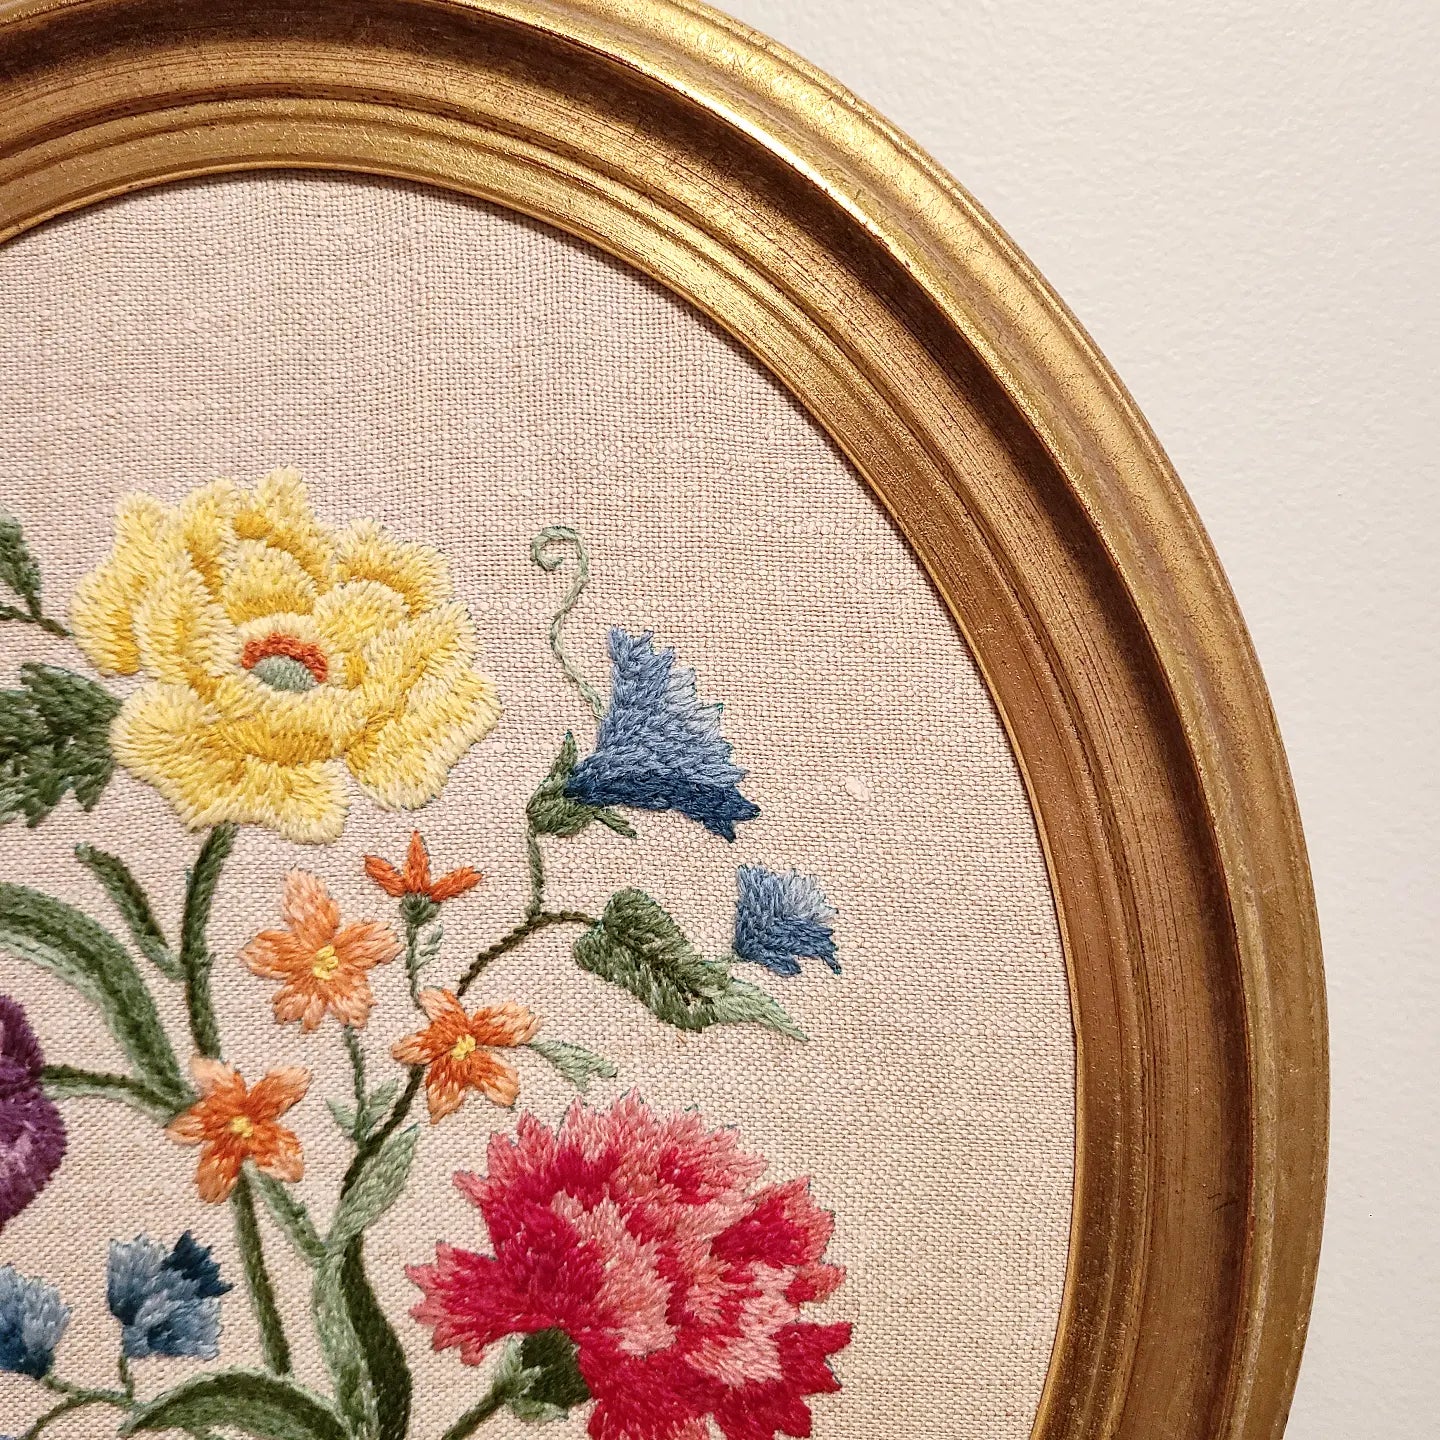 Botanical Needlework in Gold Frame